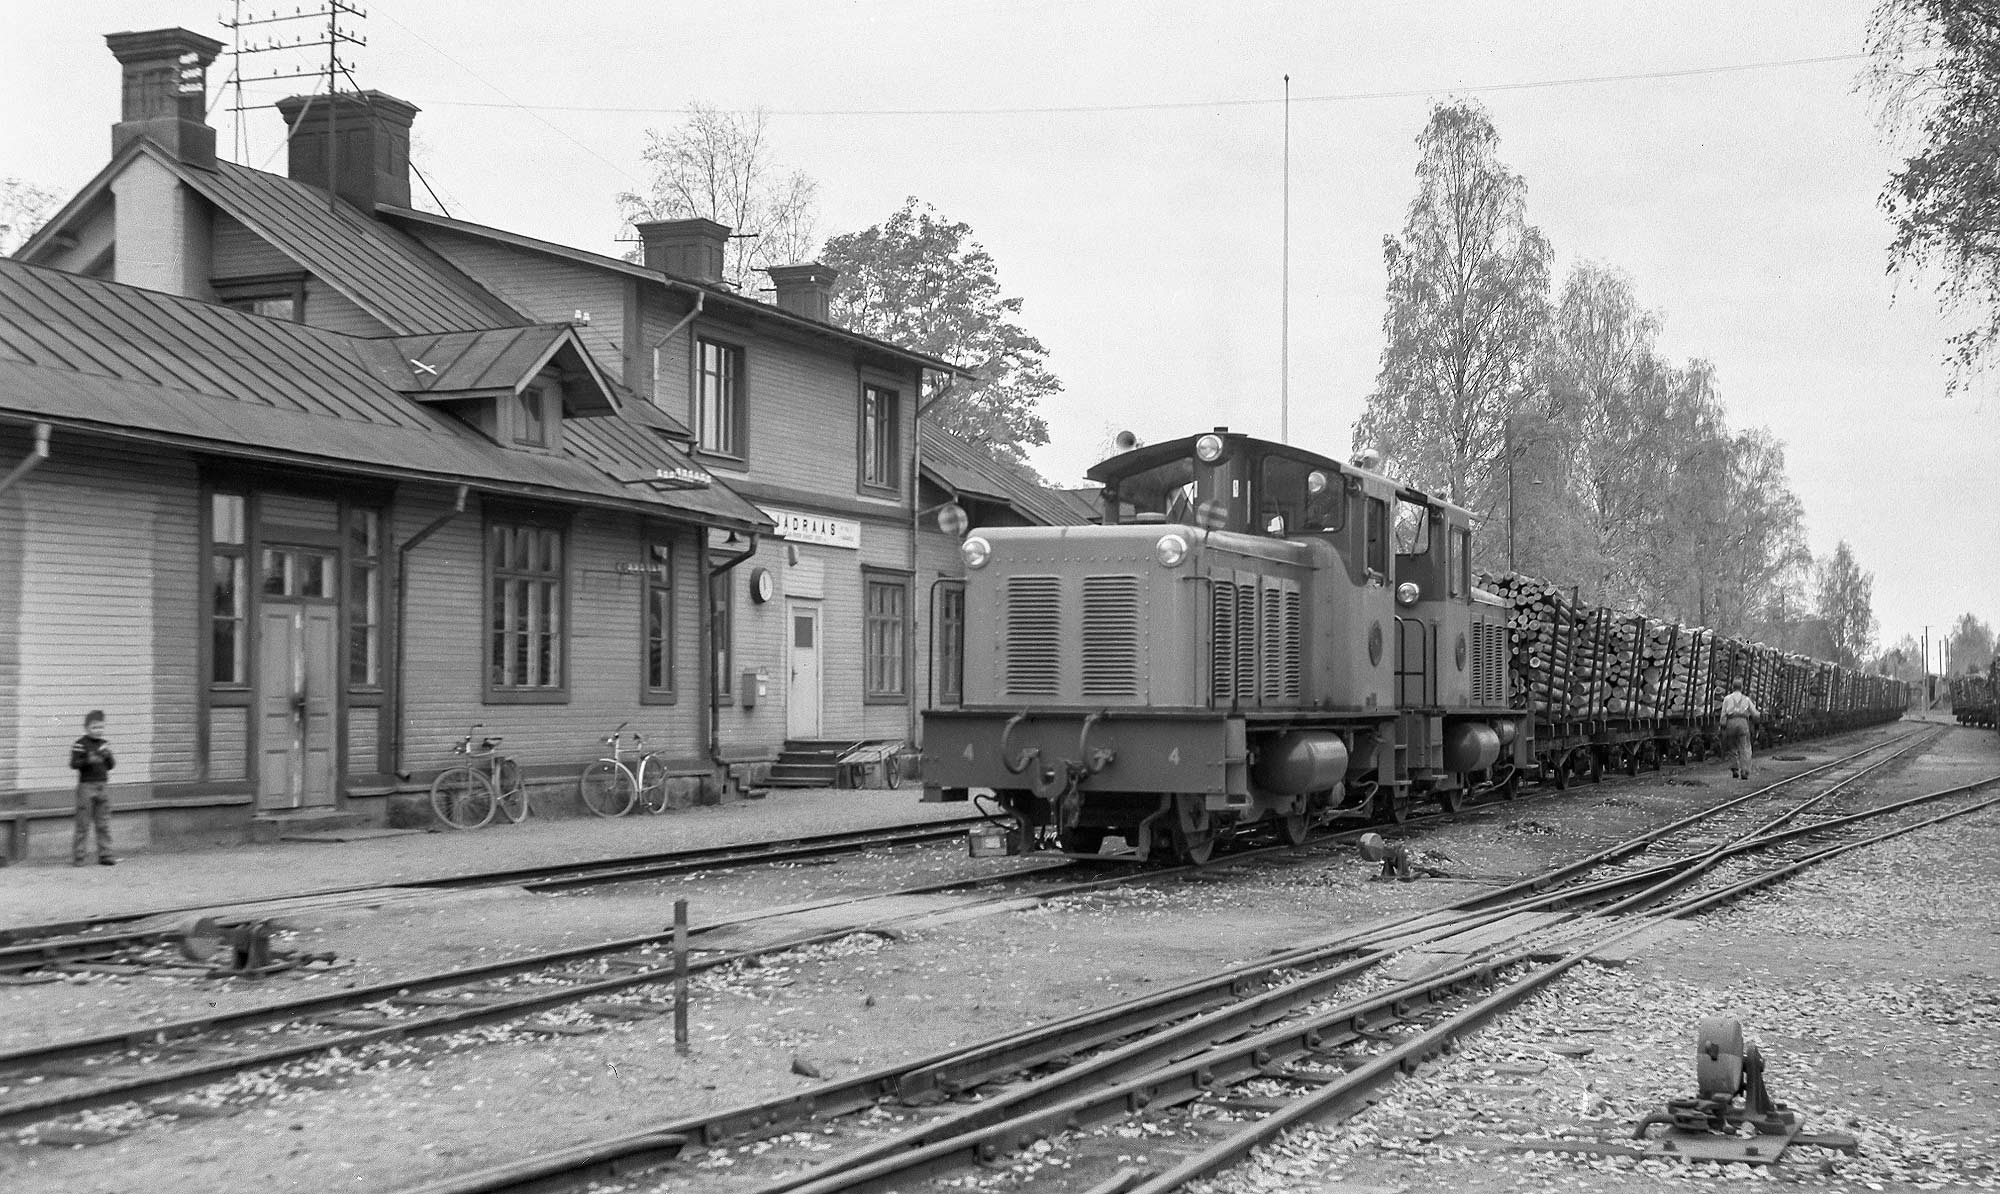 Bild: DONJ diesellok 4+3 med timmertåg i Jädraås 1958